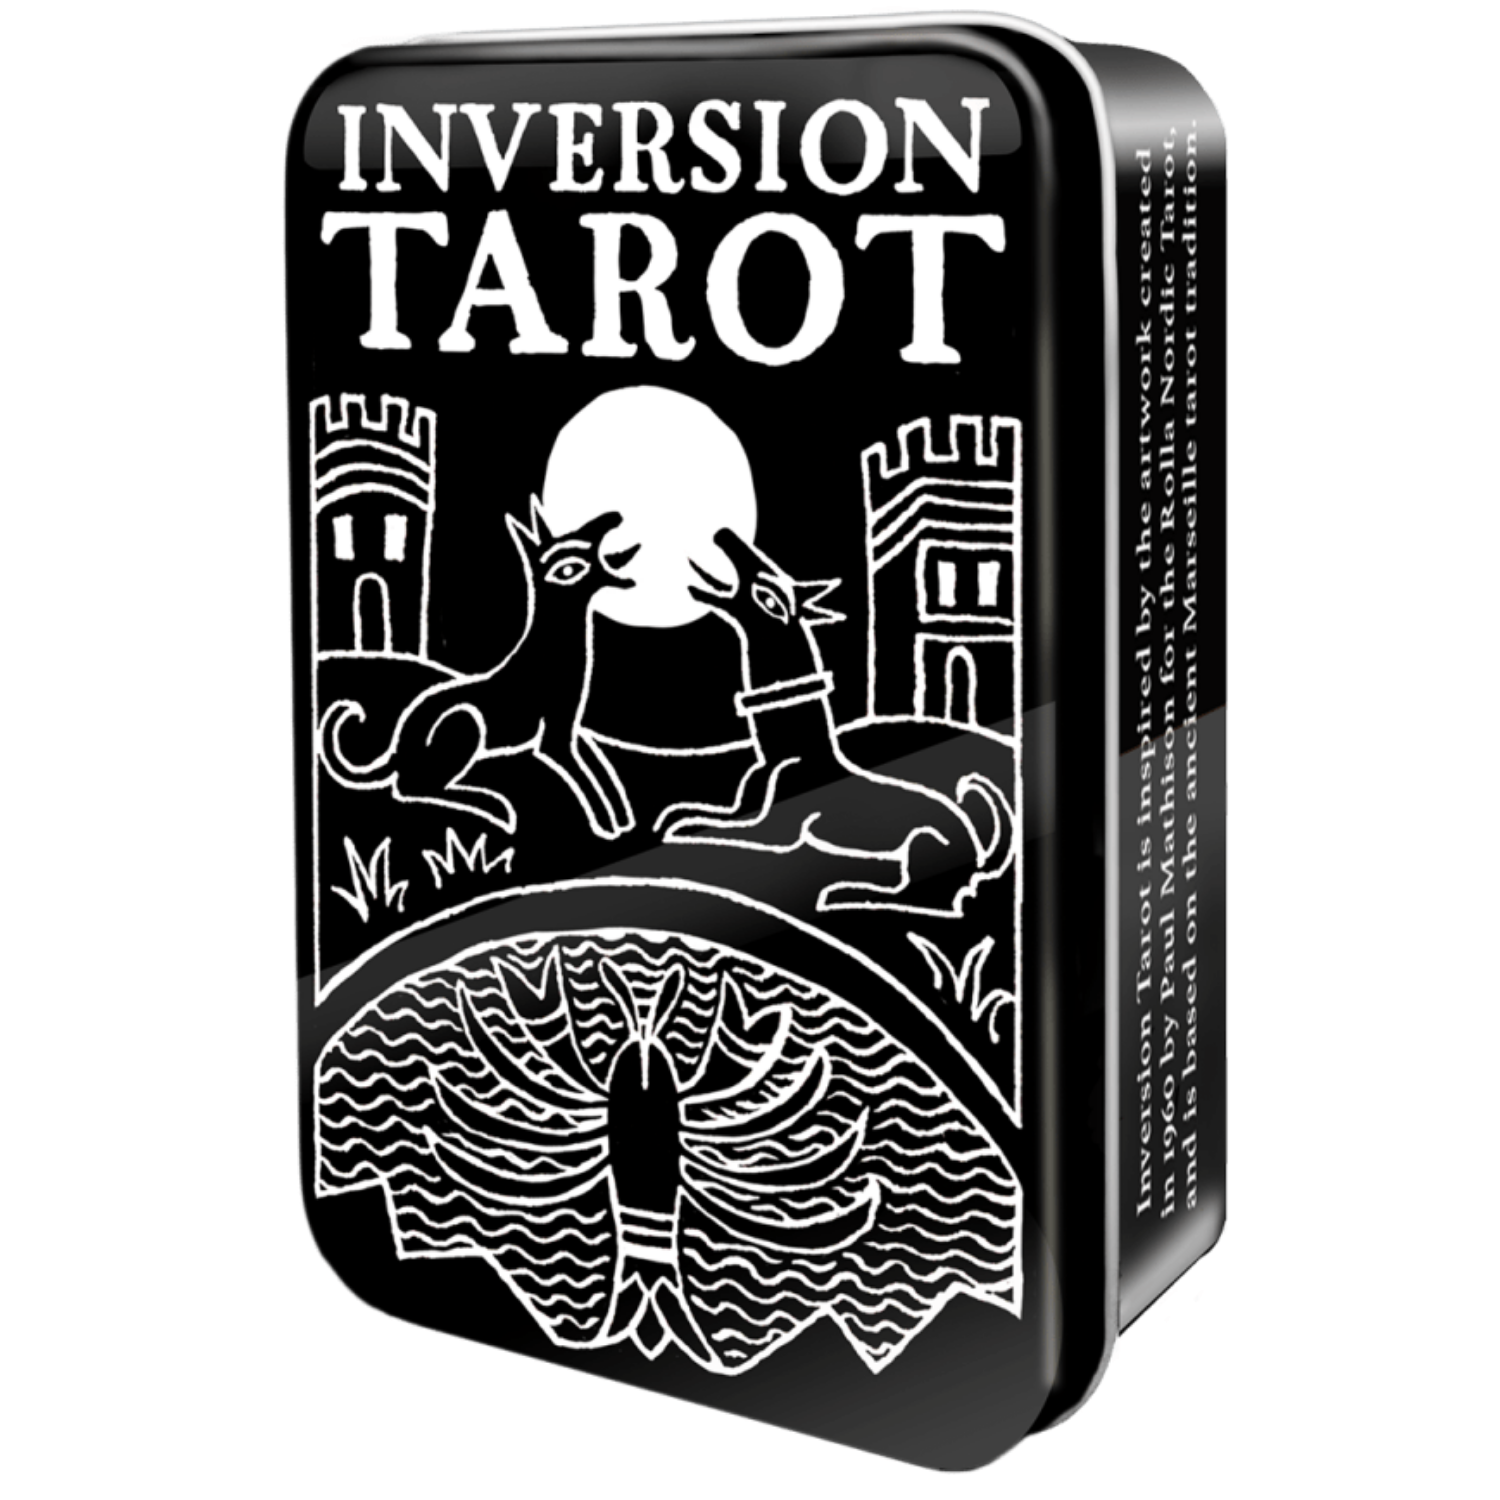 Inversion Tarot in a Tin